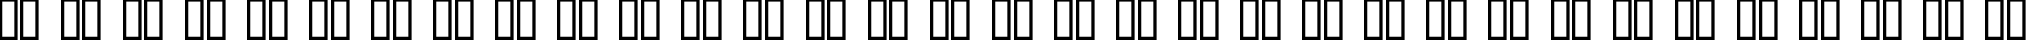 Пример написания русского алфавита шрифтом ITC Avant Garde Gothic Demi